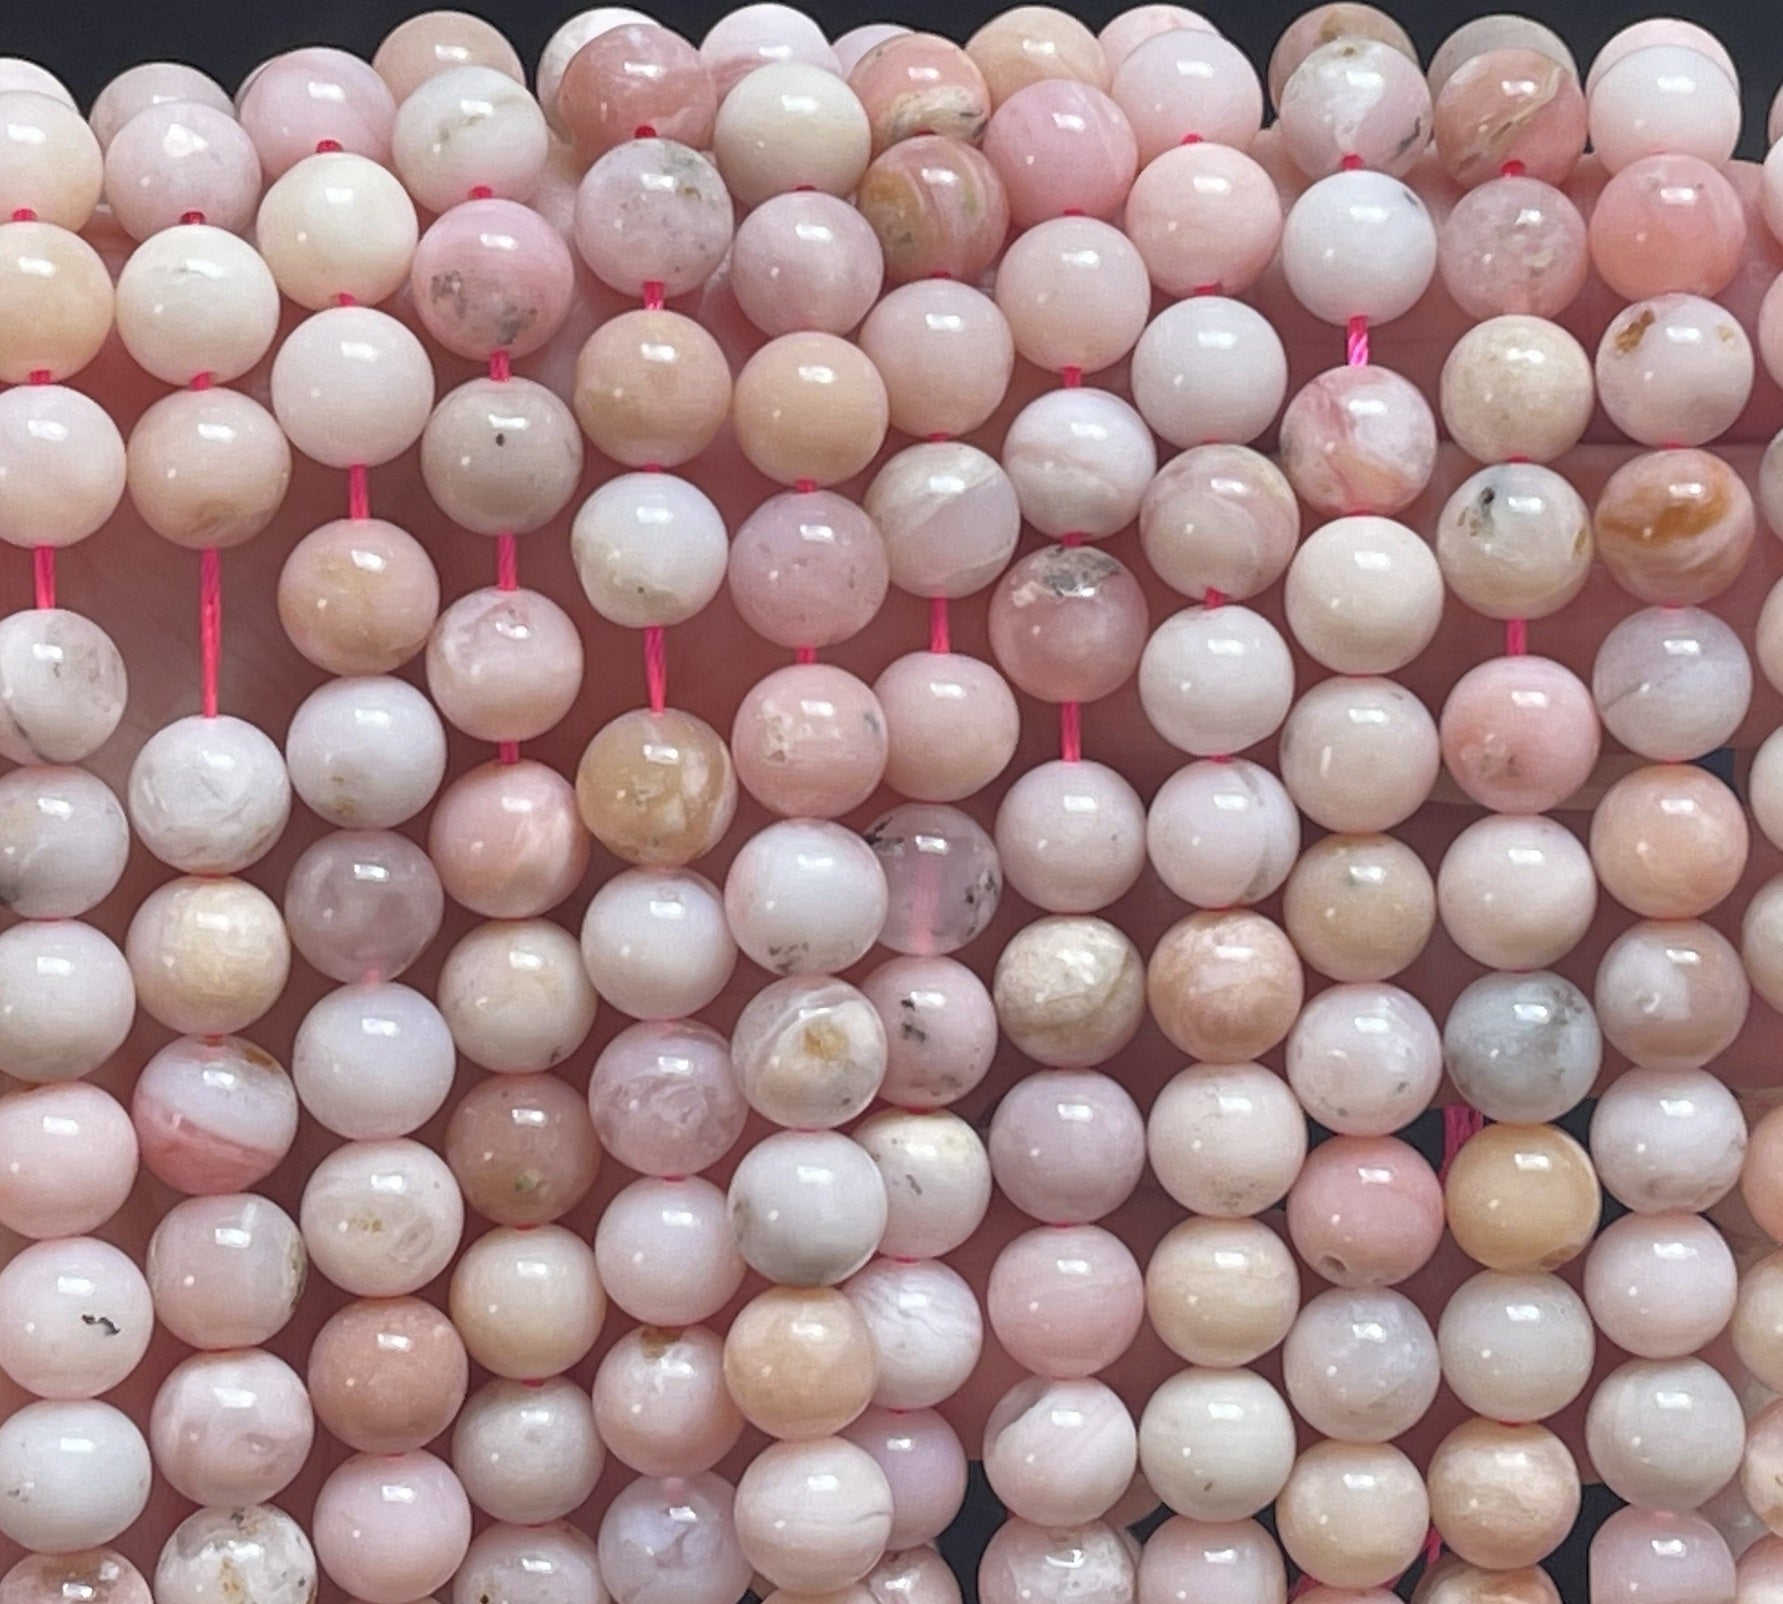 Peruvian Pink Opal 8mm round natural gemstone beads 15.5" strand - Oz Beads 